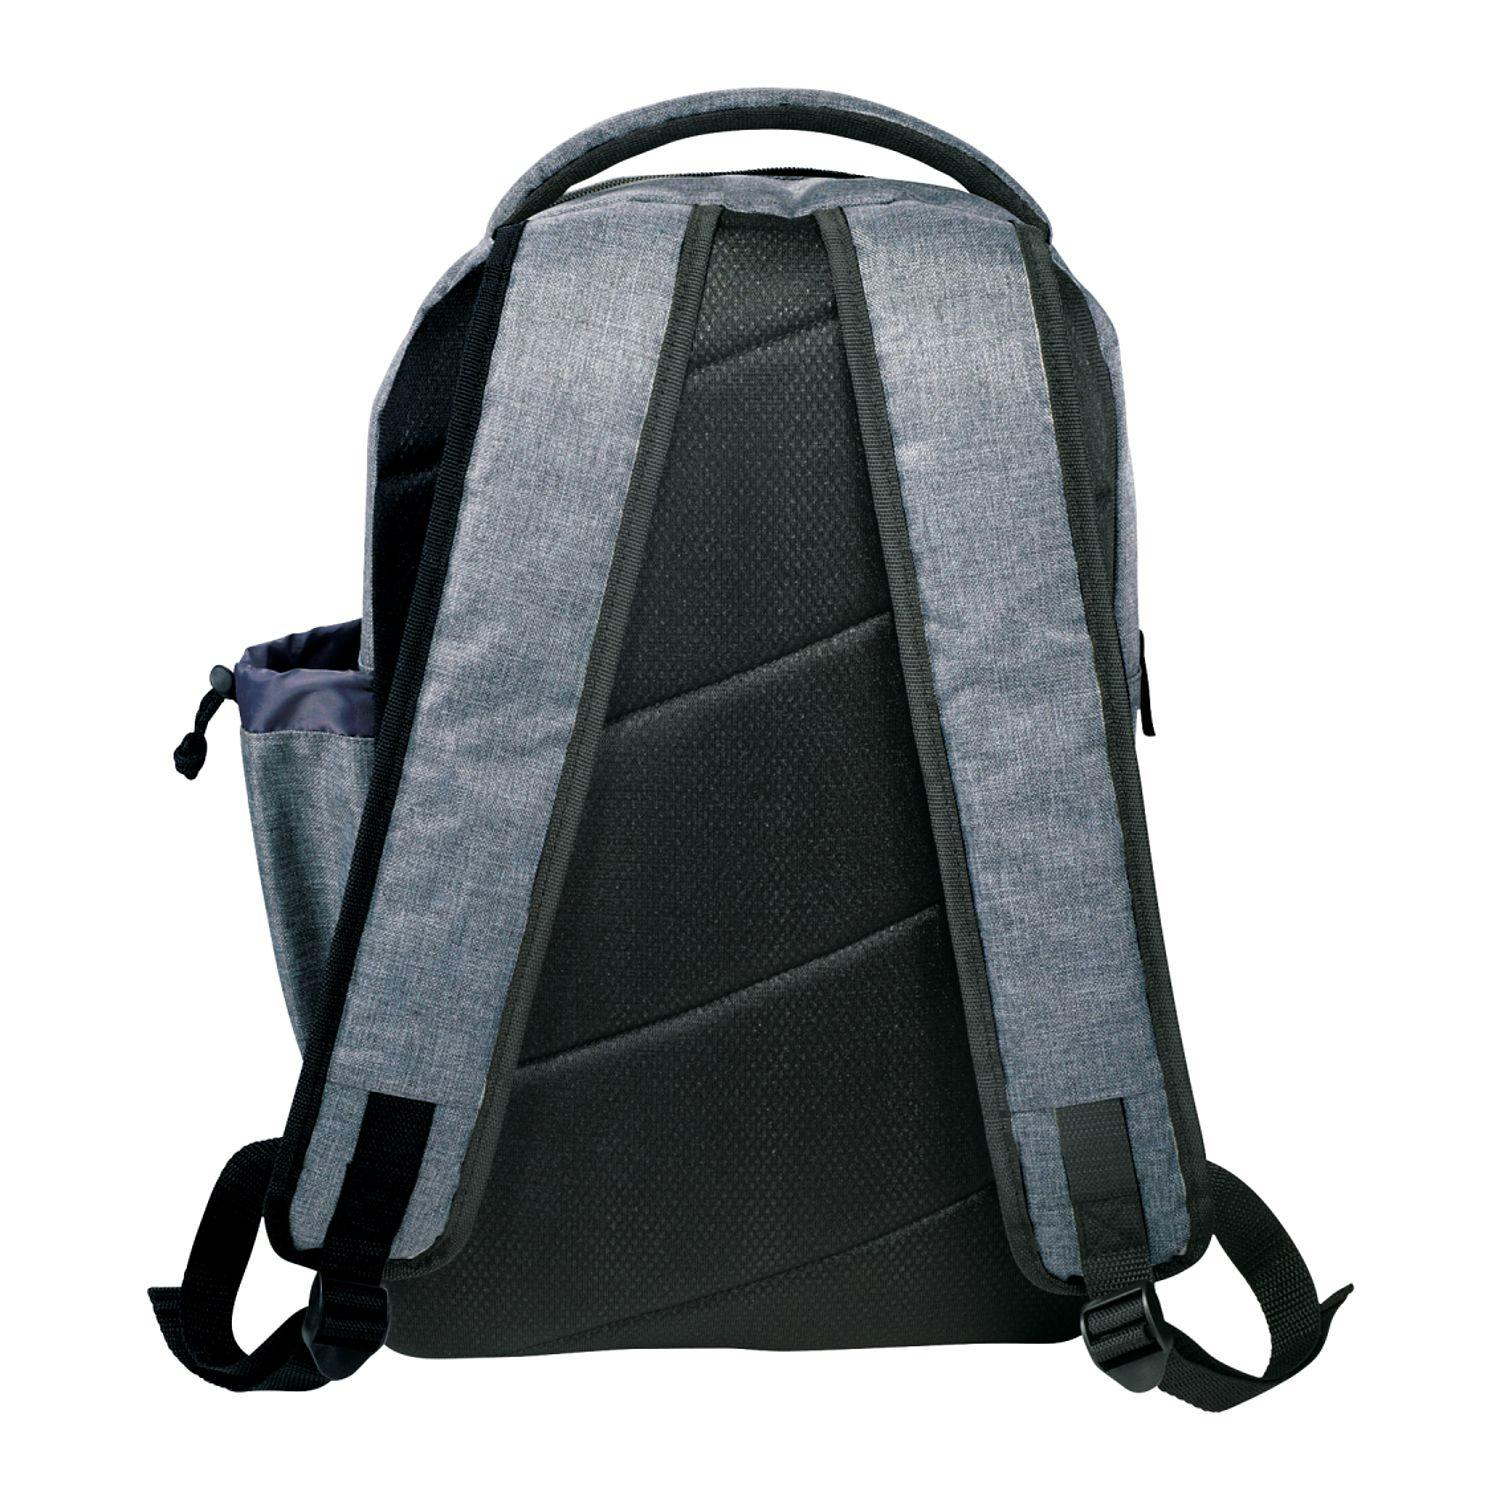 Graphite Slim 15" Computer Backpack - additional Image 1